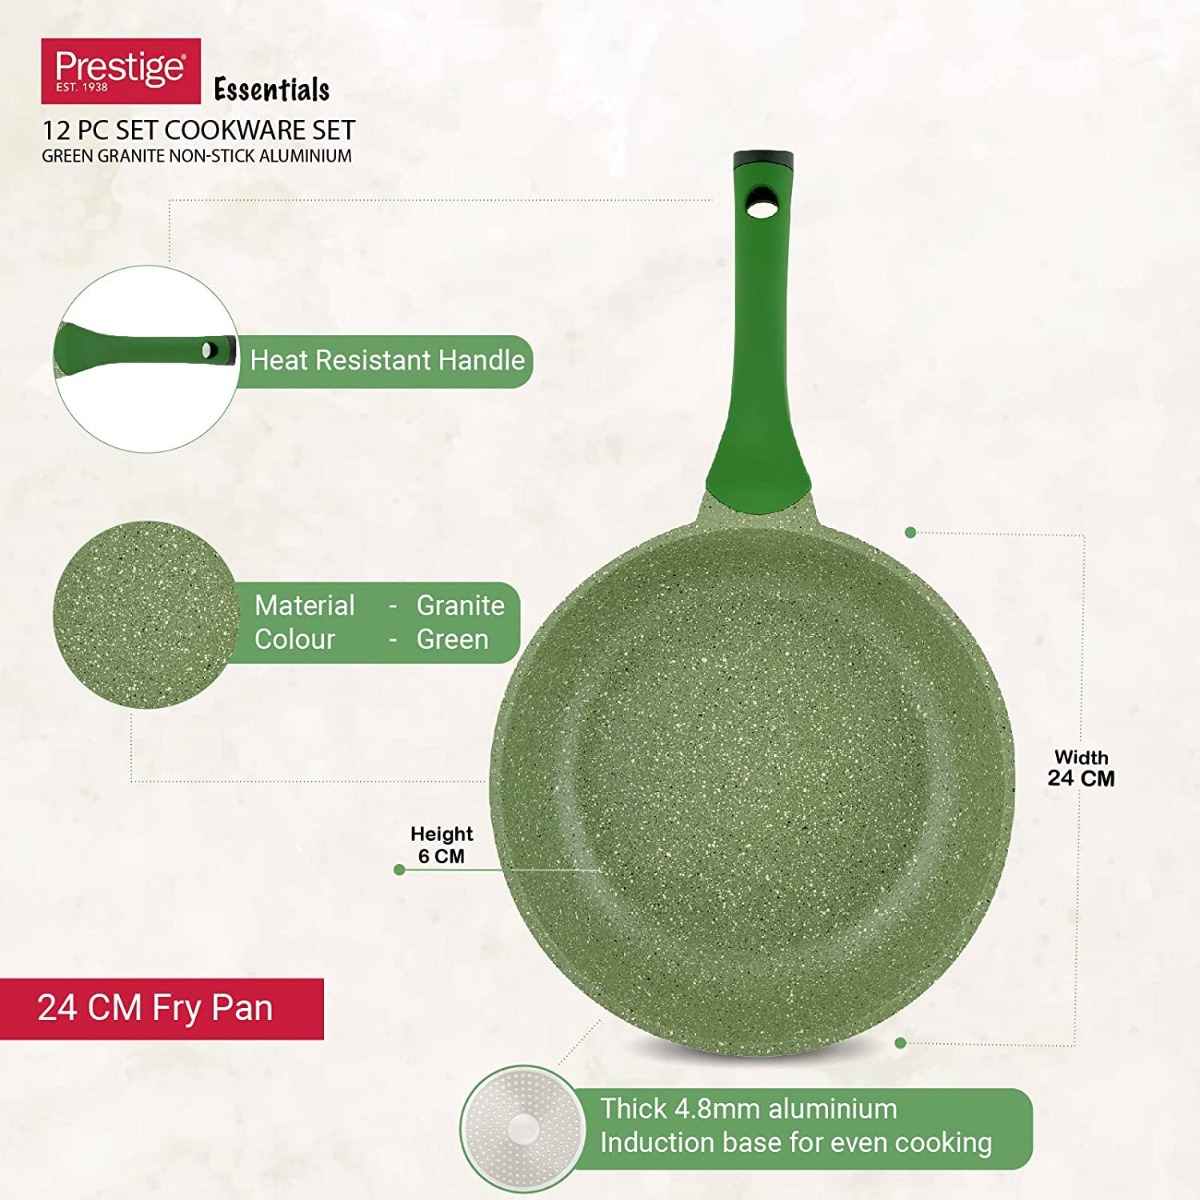 Prestige Essentials 12 pc Cookware set Green Granite Non-Stick Aluminium



